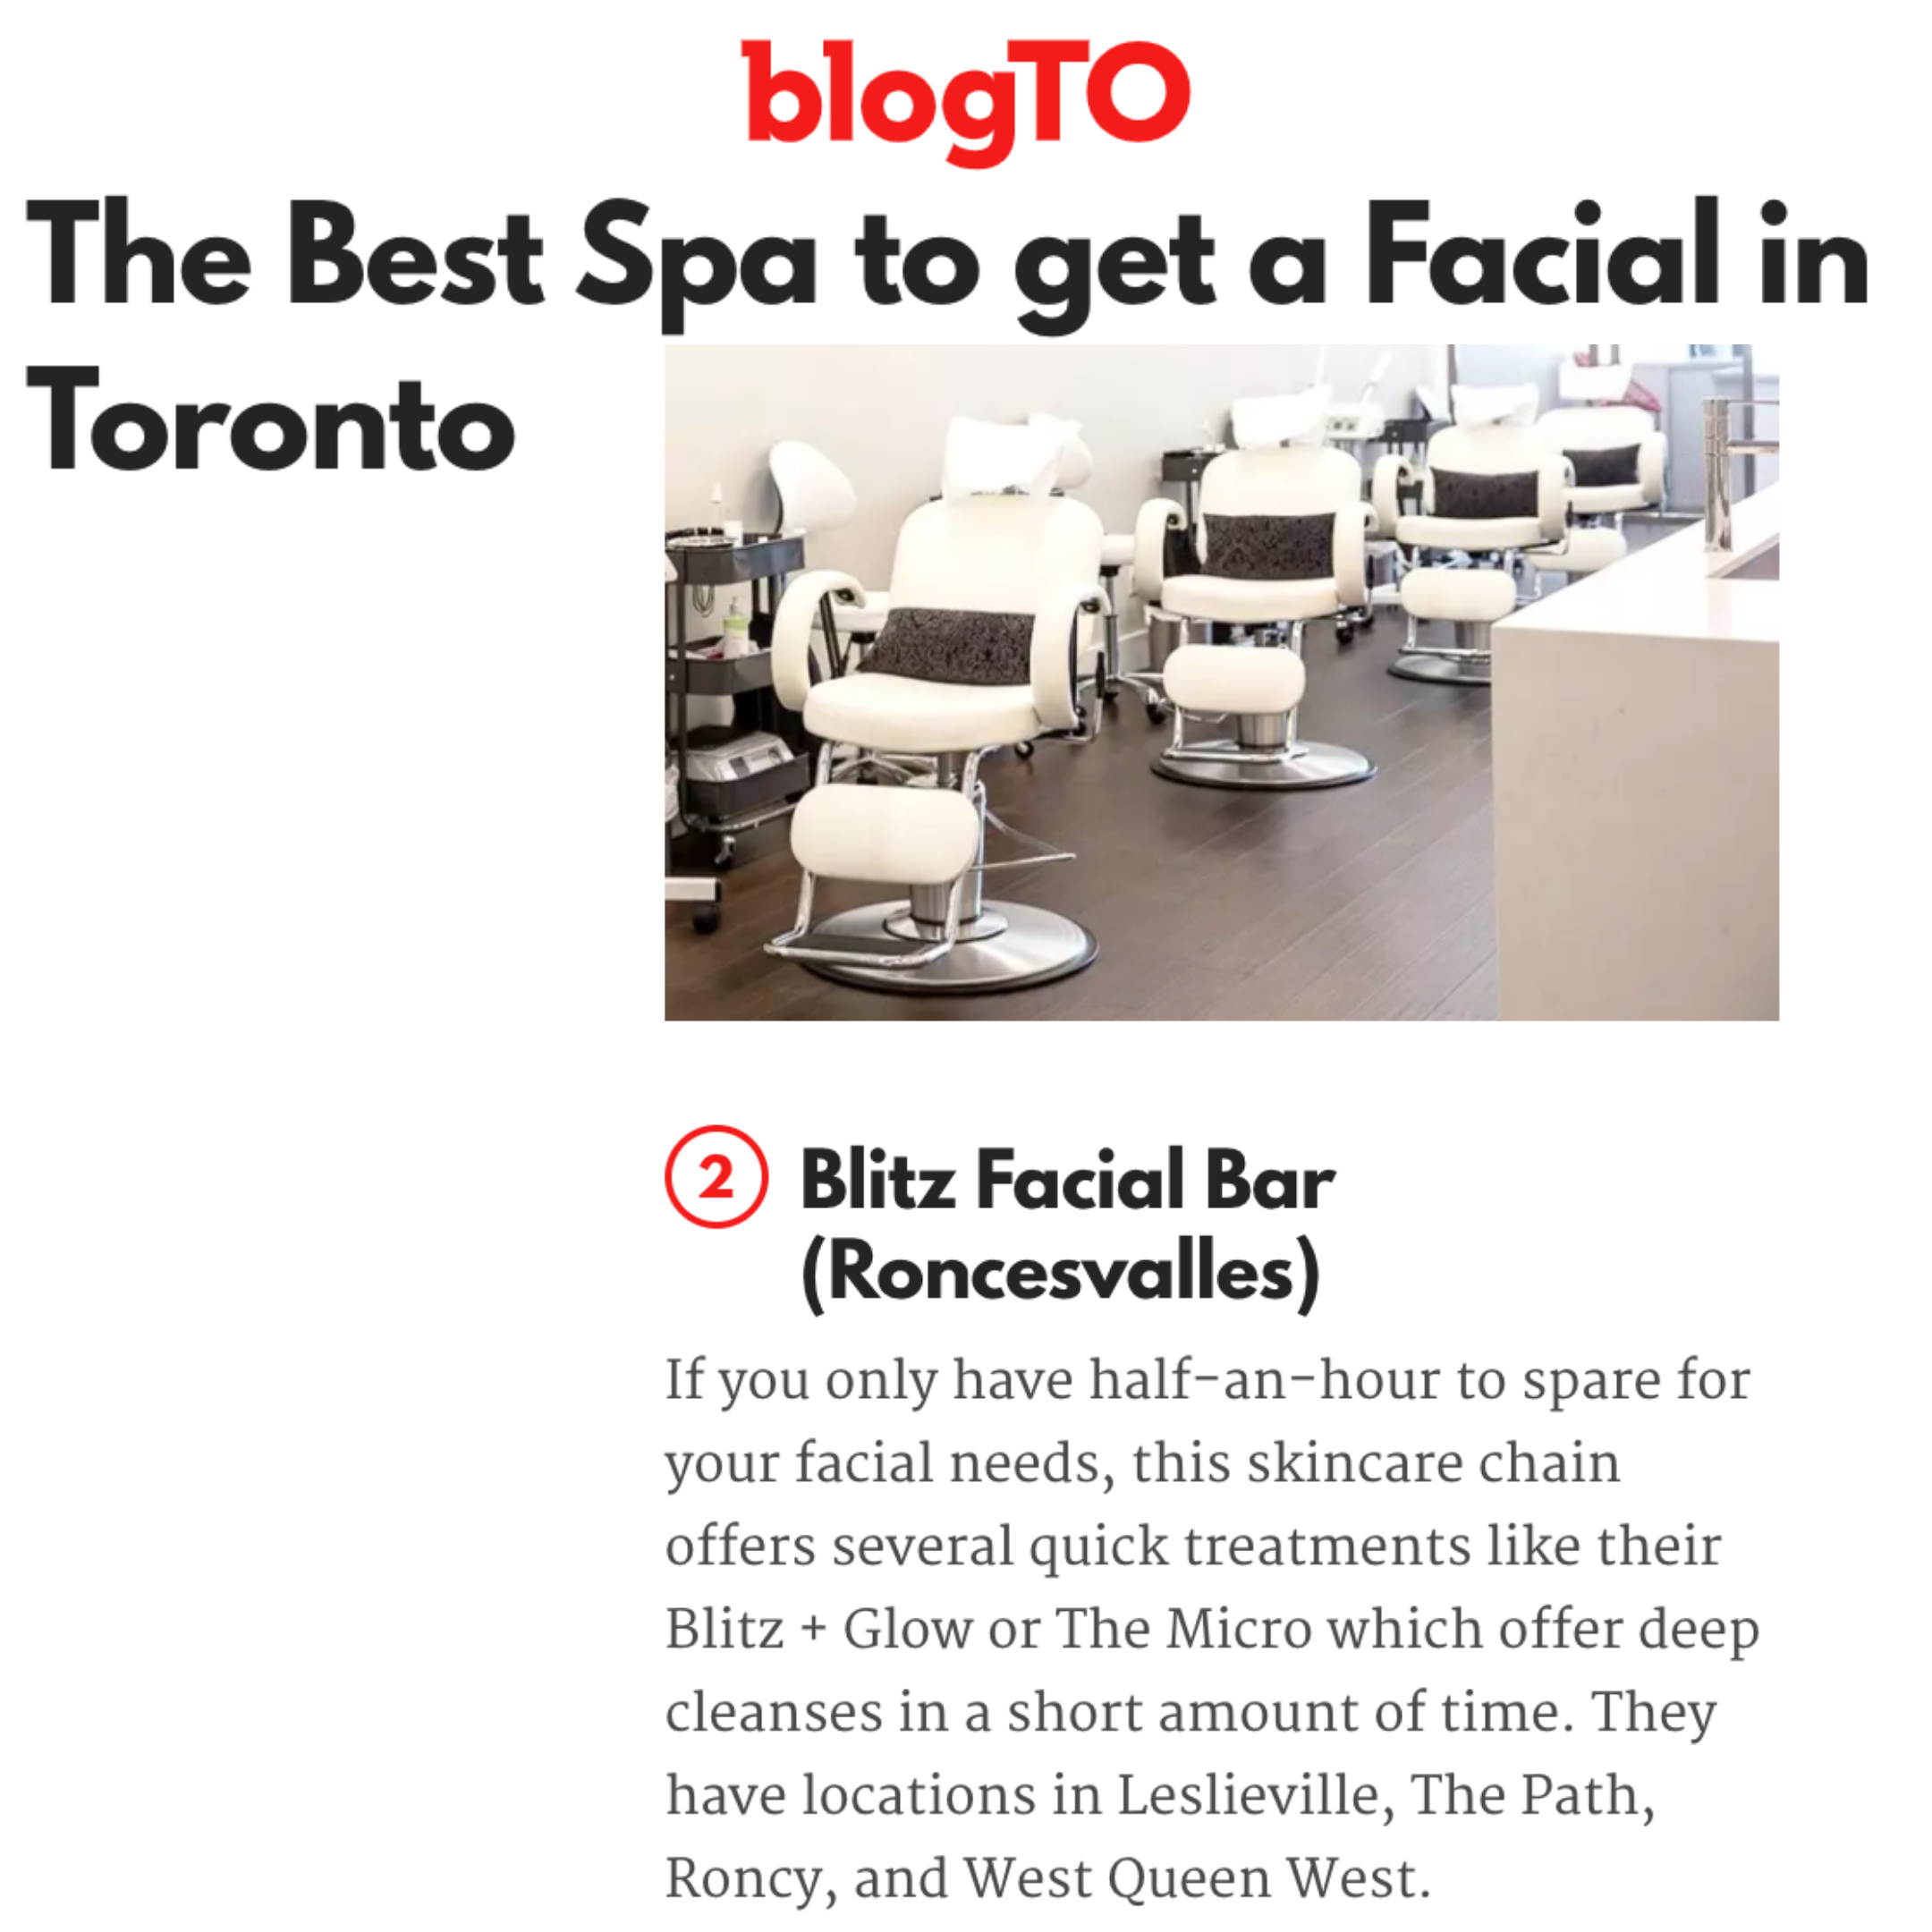 BlogTO features Blitz Facial Bar in their roundup of Best Spa to get a Facial in Toronto.